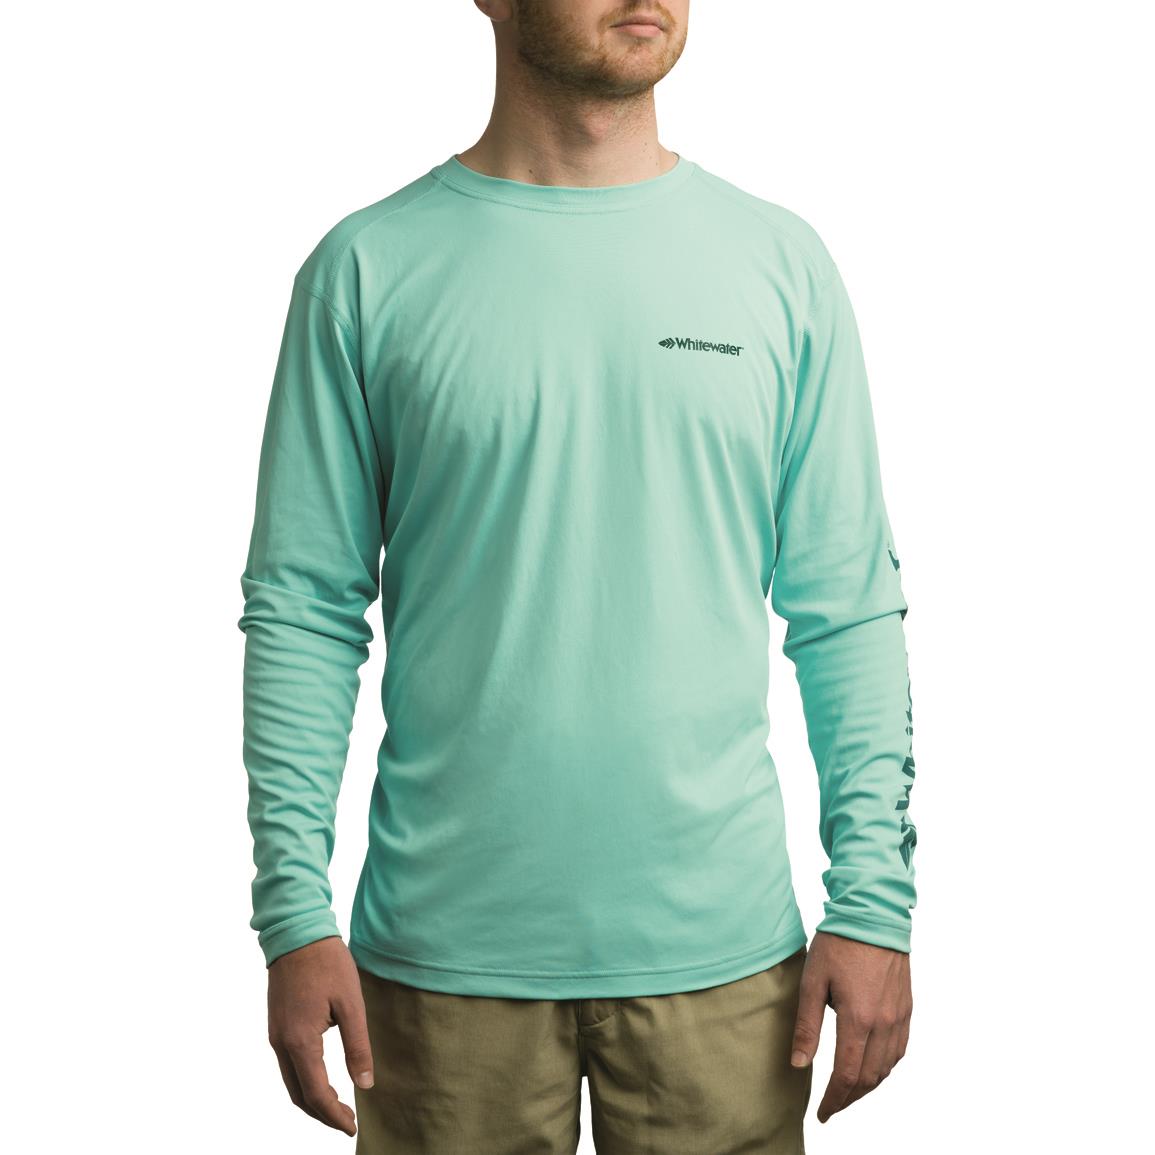 Whitewater Men's Tech Shirt, Lagoon